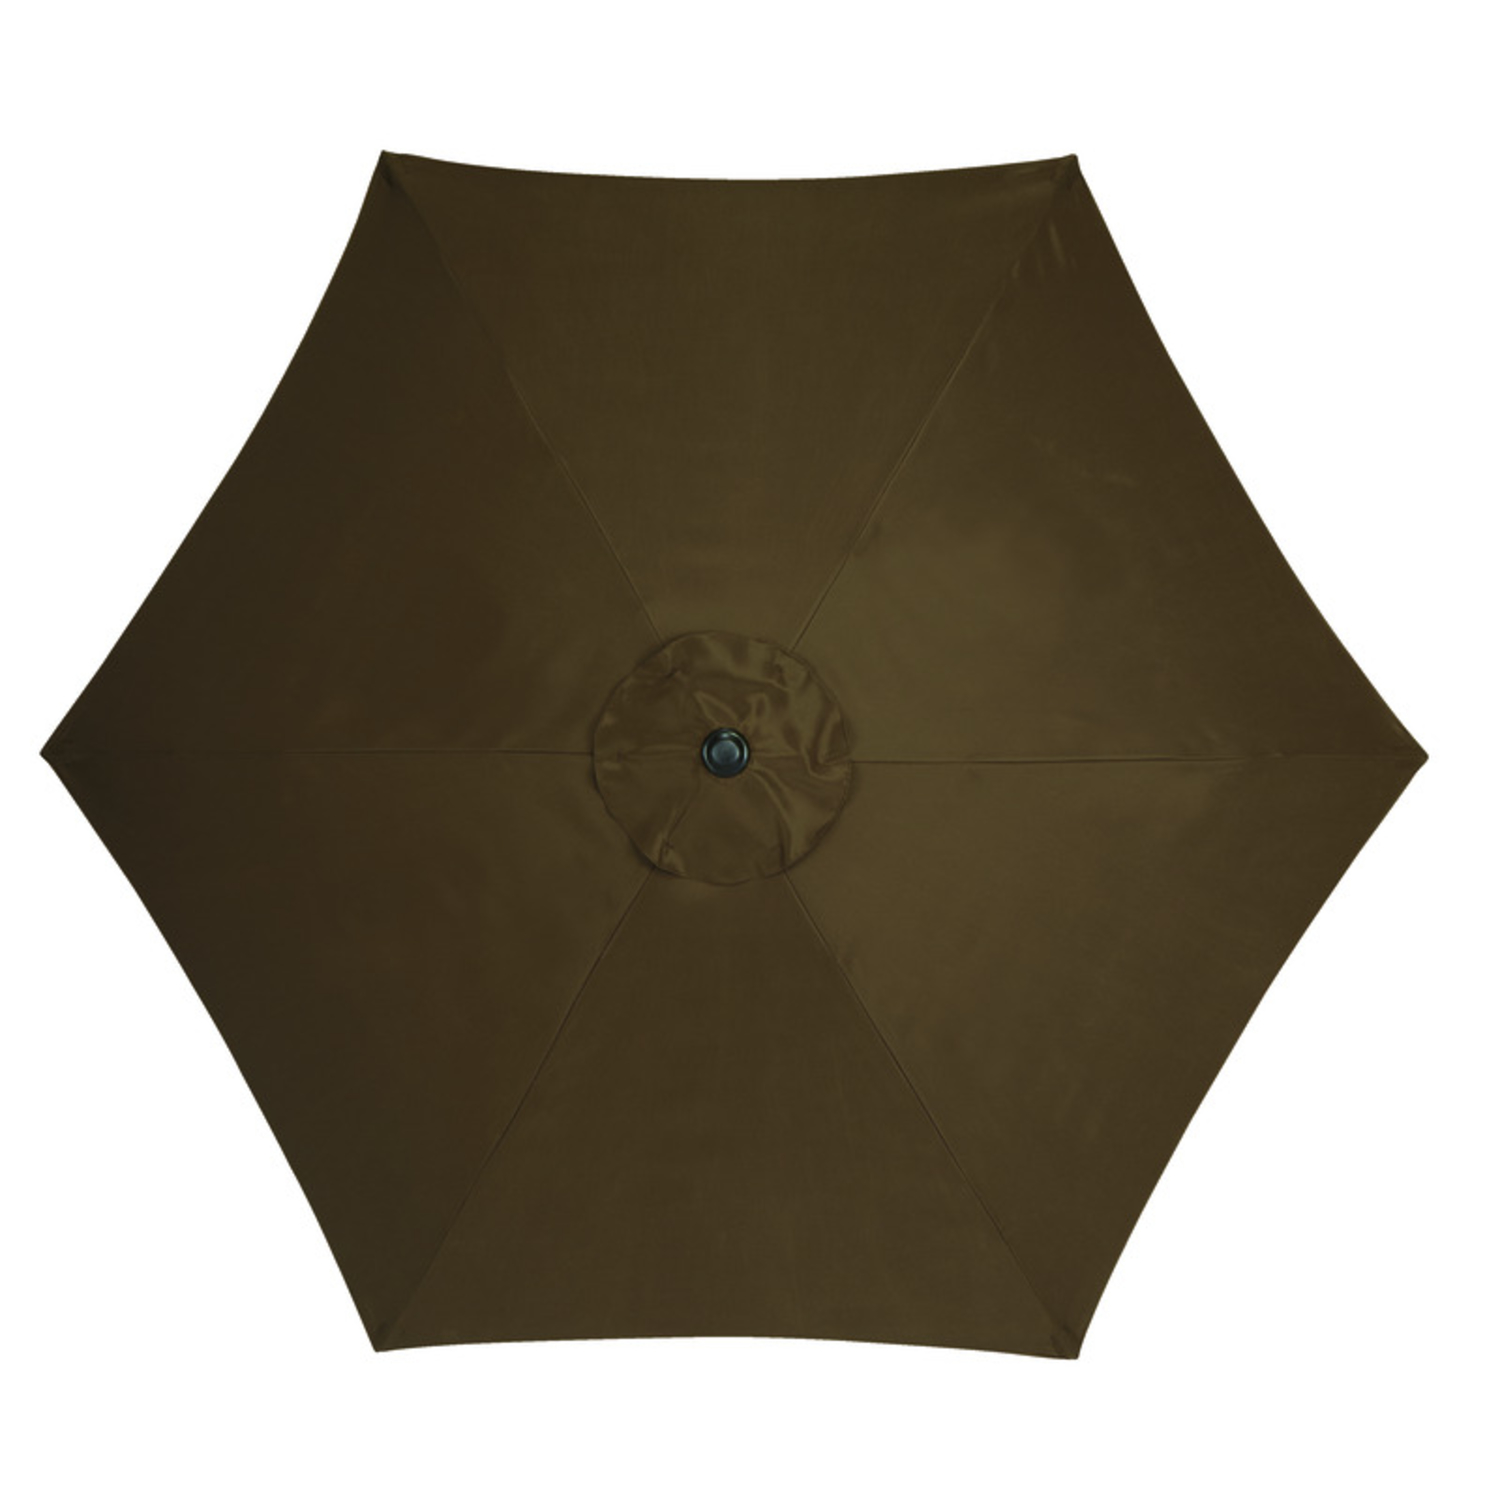 Living Accents 9 ft. Tiltable Brown Market Umbrella